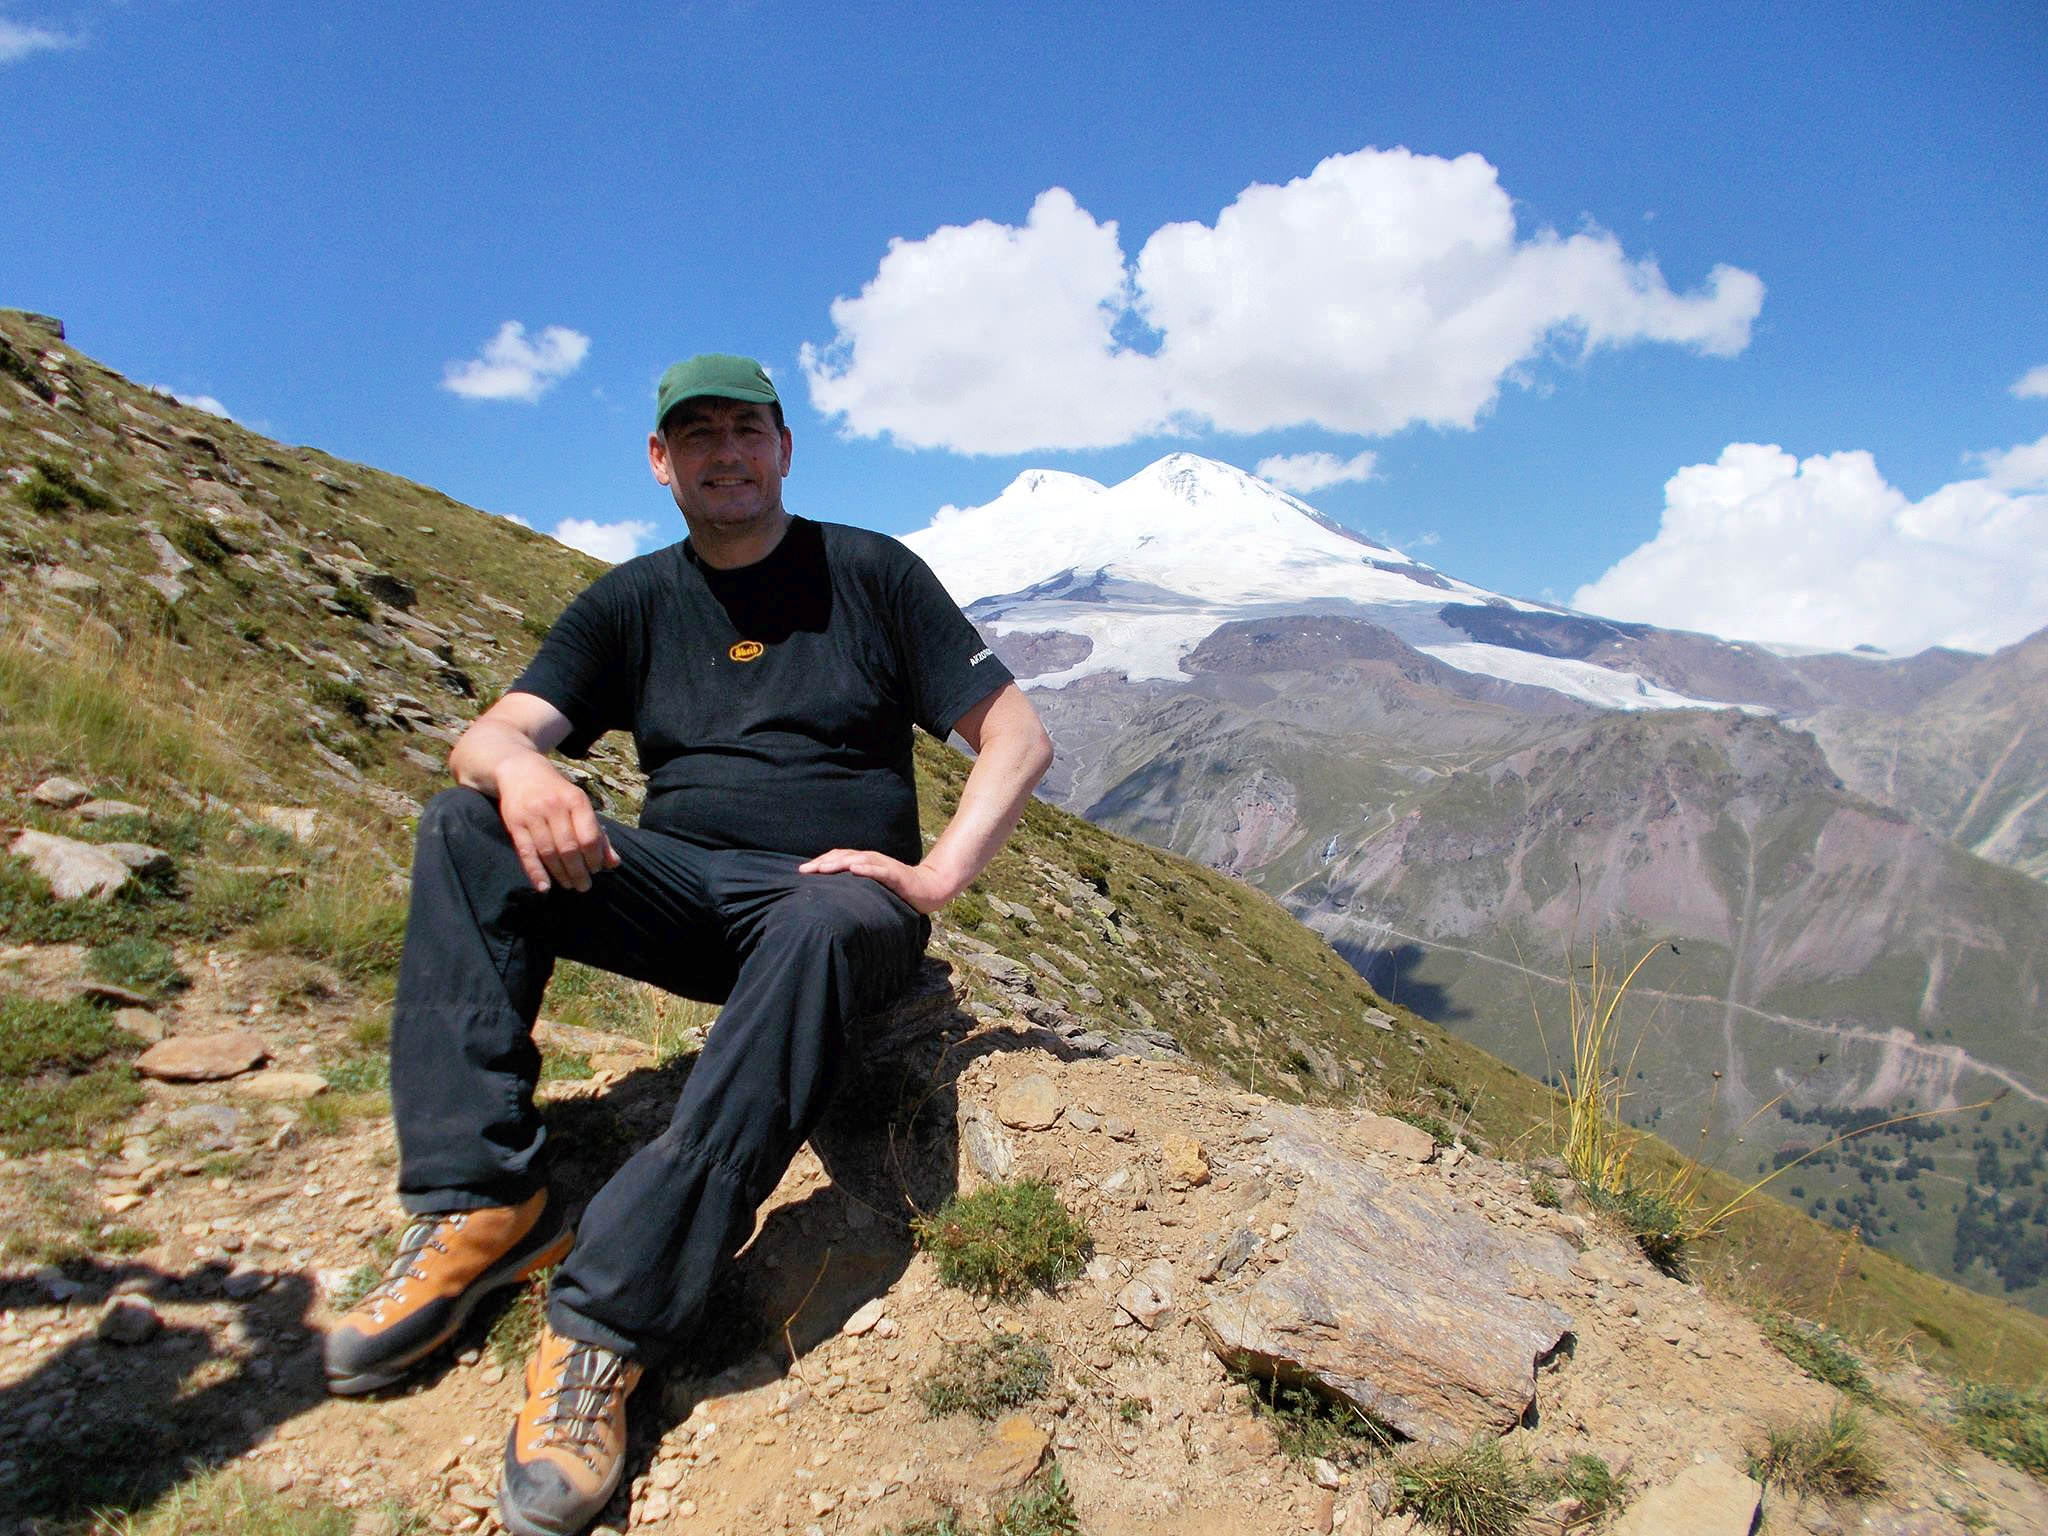 Fergal with Mt. Elbrus